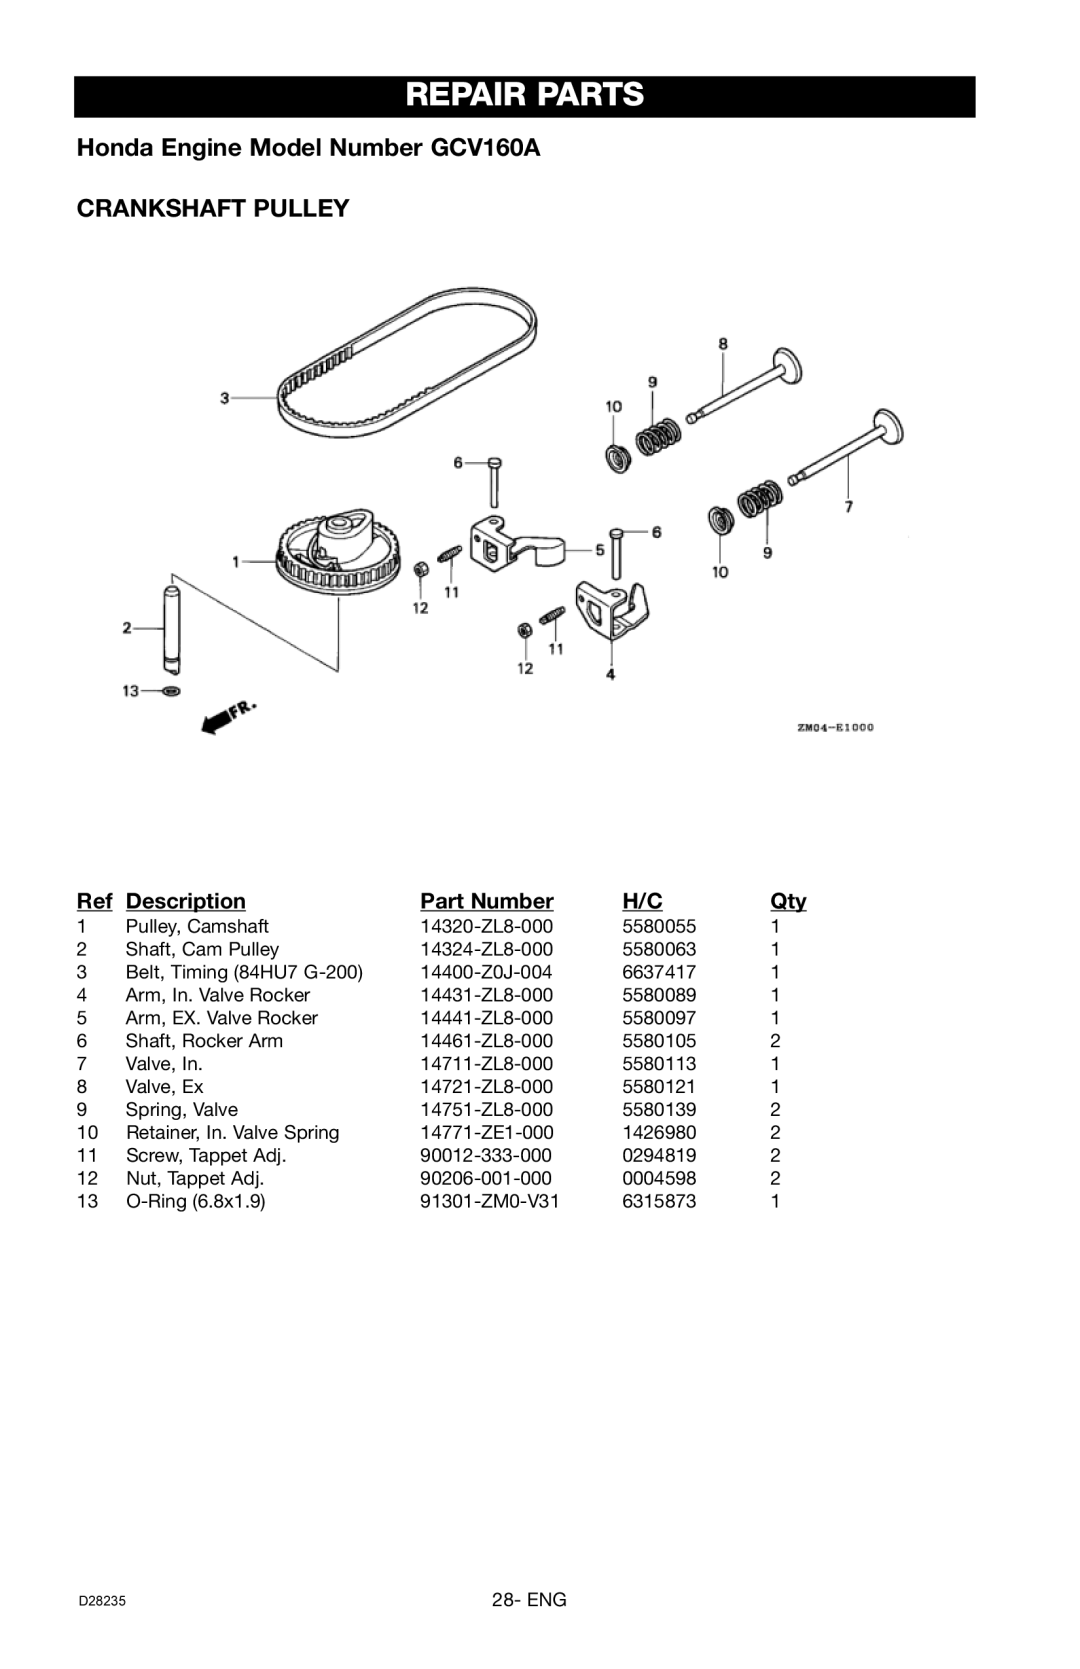 Craftsman D28235, 919.672241 Repair Parts, Honda Engine Model Number GCV160A, Crankshaft Pulley, Description, Part Number 